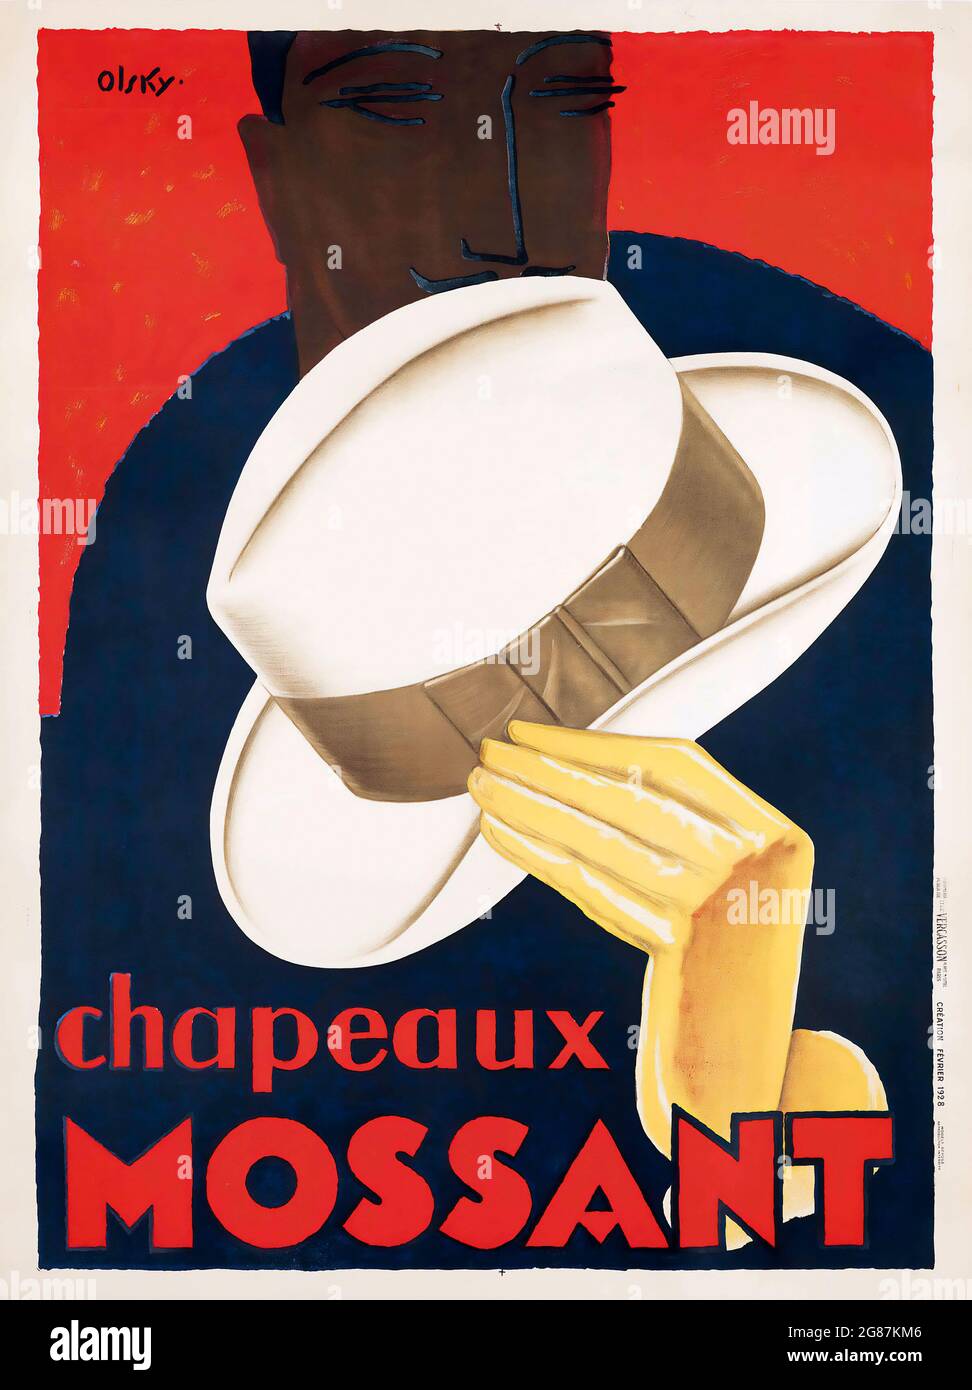 Francese Art Deco Chapeaux Mossant - poster pubblicitario di Olsky. 1928. Annuncio per cappelli. Foto Stock